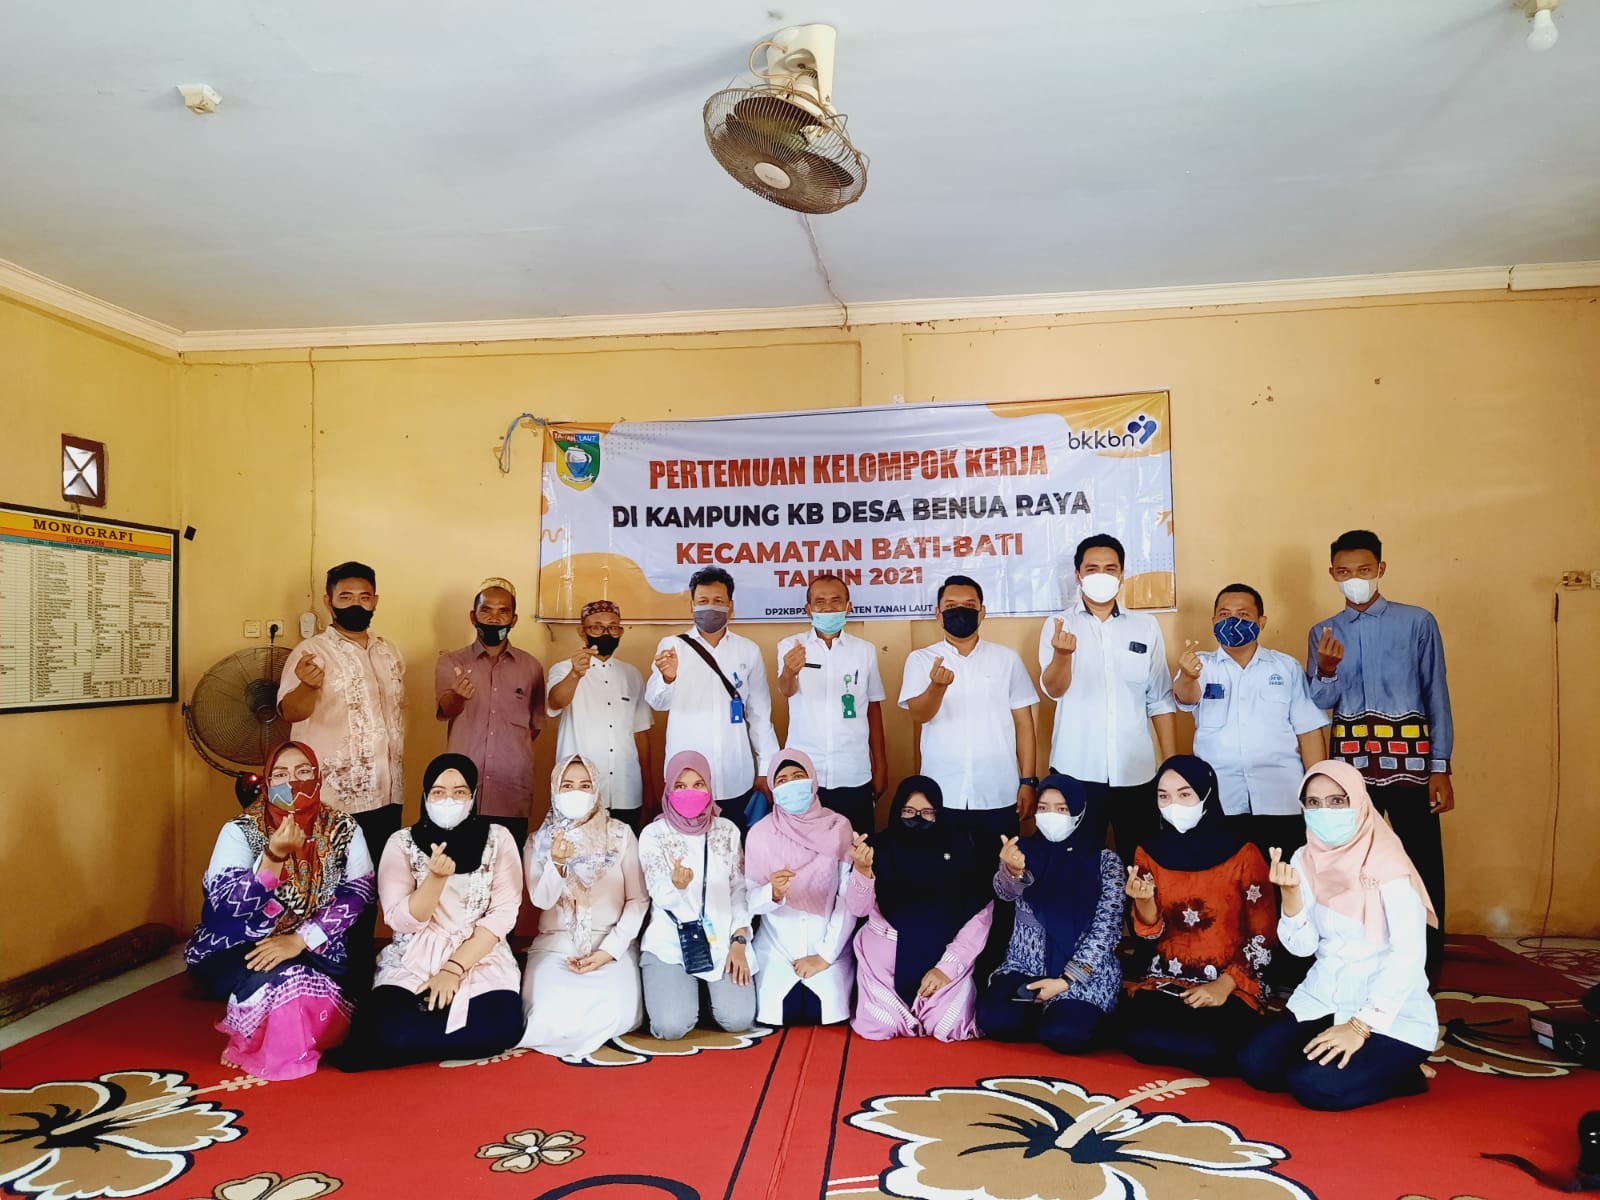 Pertemuan Pokja di Kampung KB desa Benua Raya Kecamatan Bati-Bati  Tahun 2021